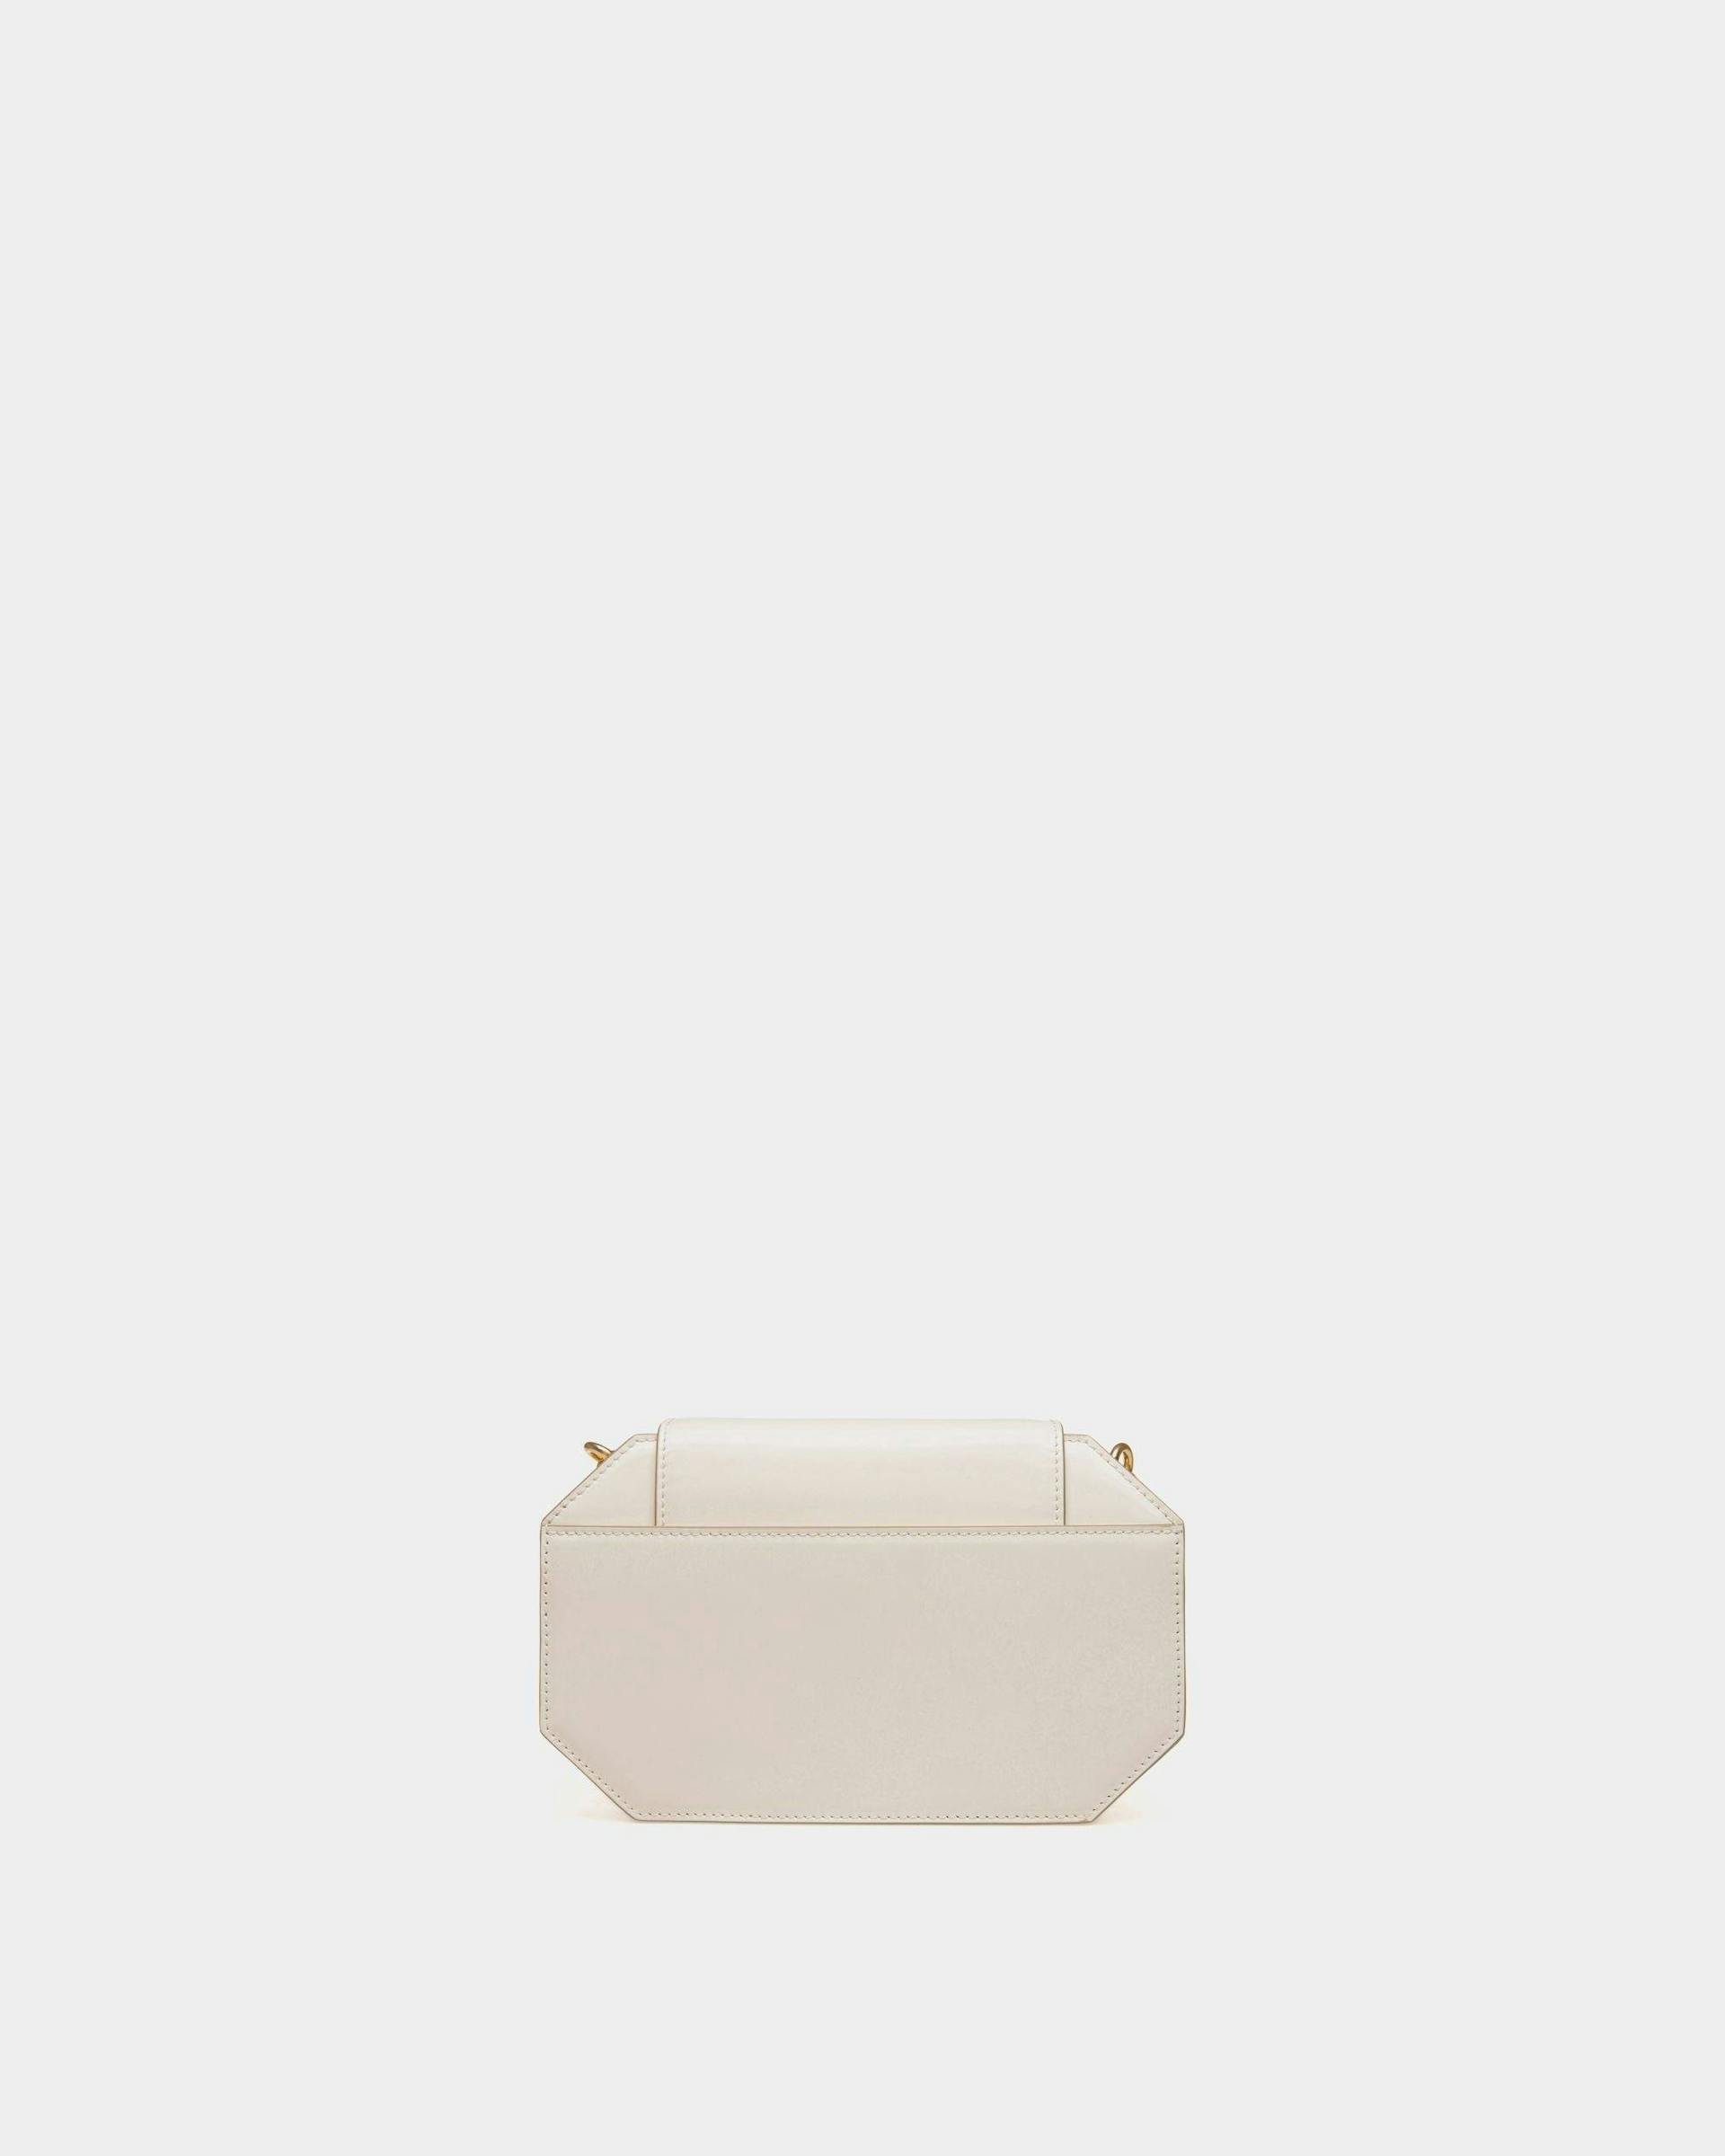 Women's Emblem Mini Bag in White Patent Leather | Bally | Still Life Open / Inside